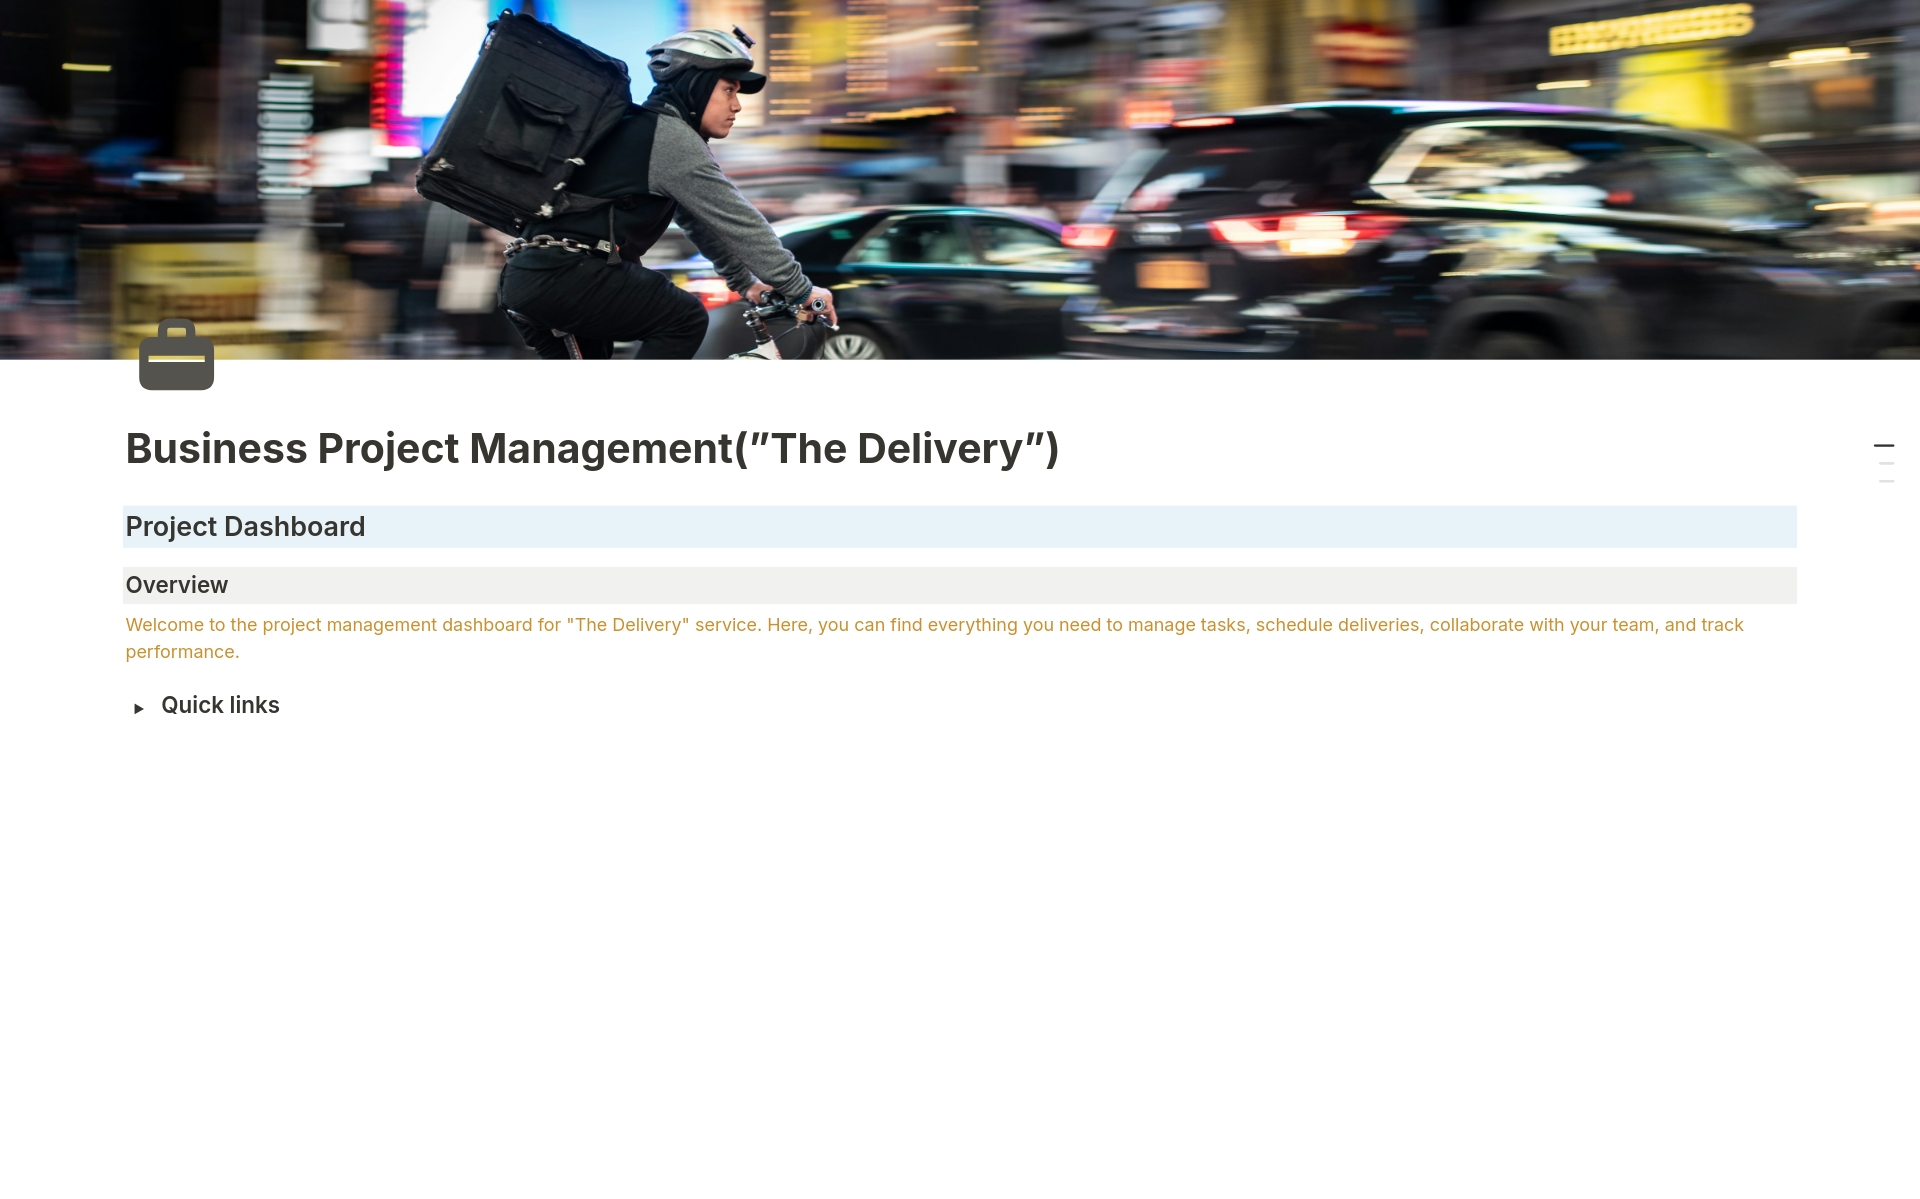 Vista previa de una plantilla para The Delivery System Management